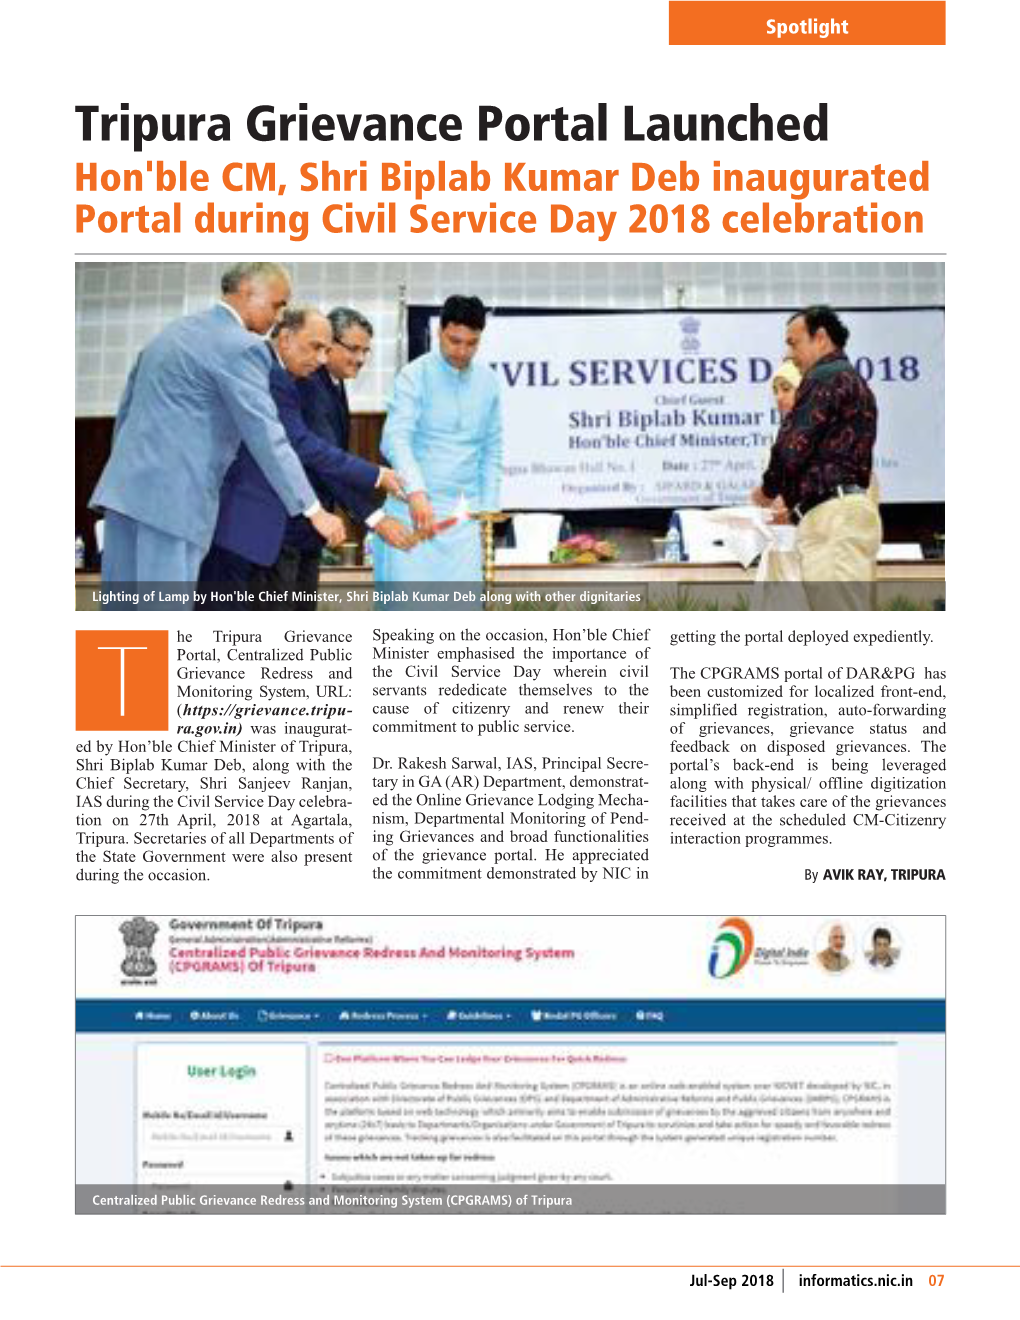 Tripura Grievance Portal Launched Hon'ble CM, Shri Biplab Kumar Deb Inaugurated Portal During Civil Service Day 2018 Celebration